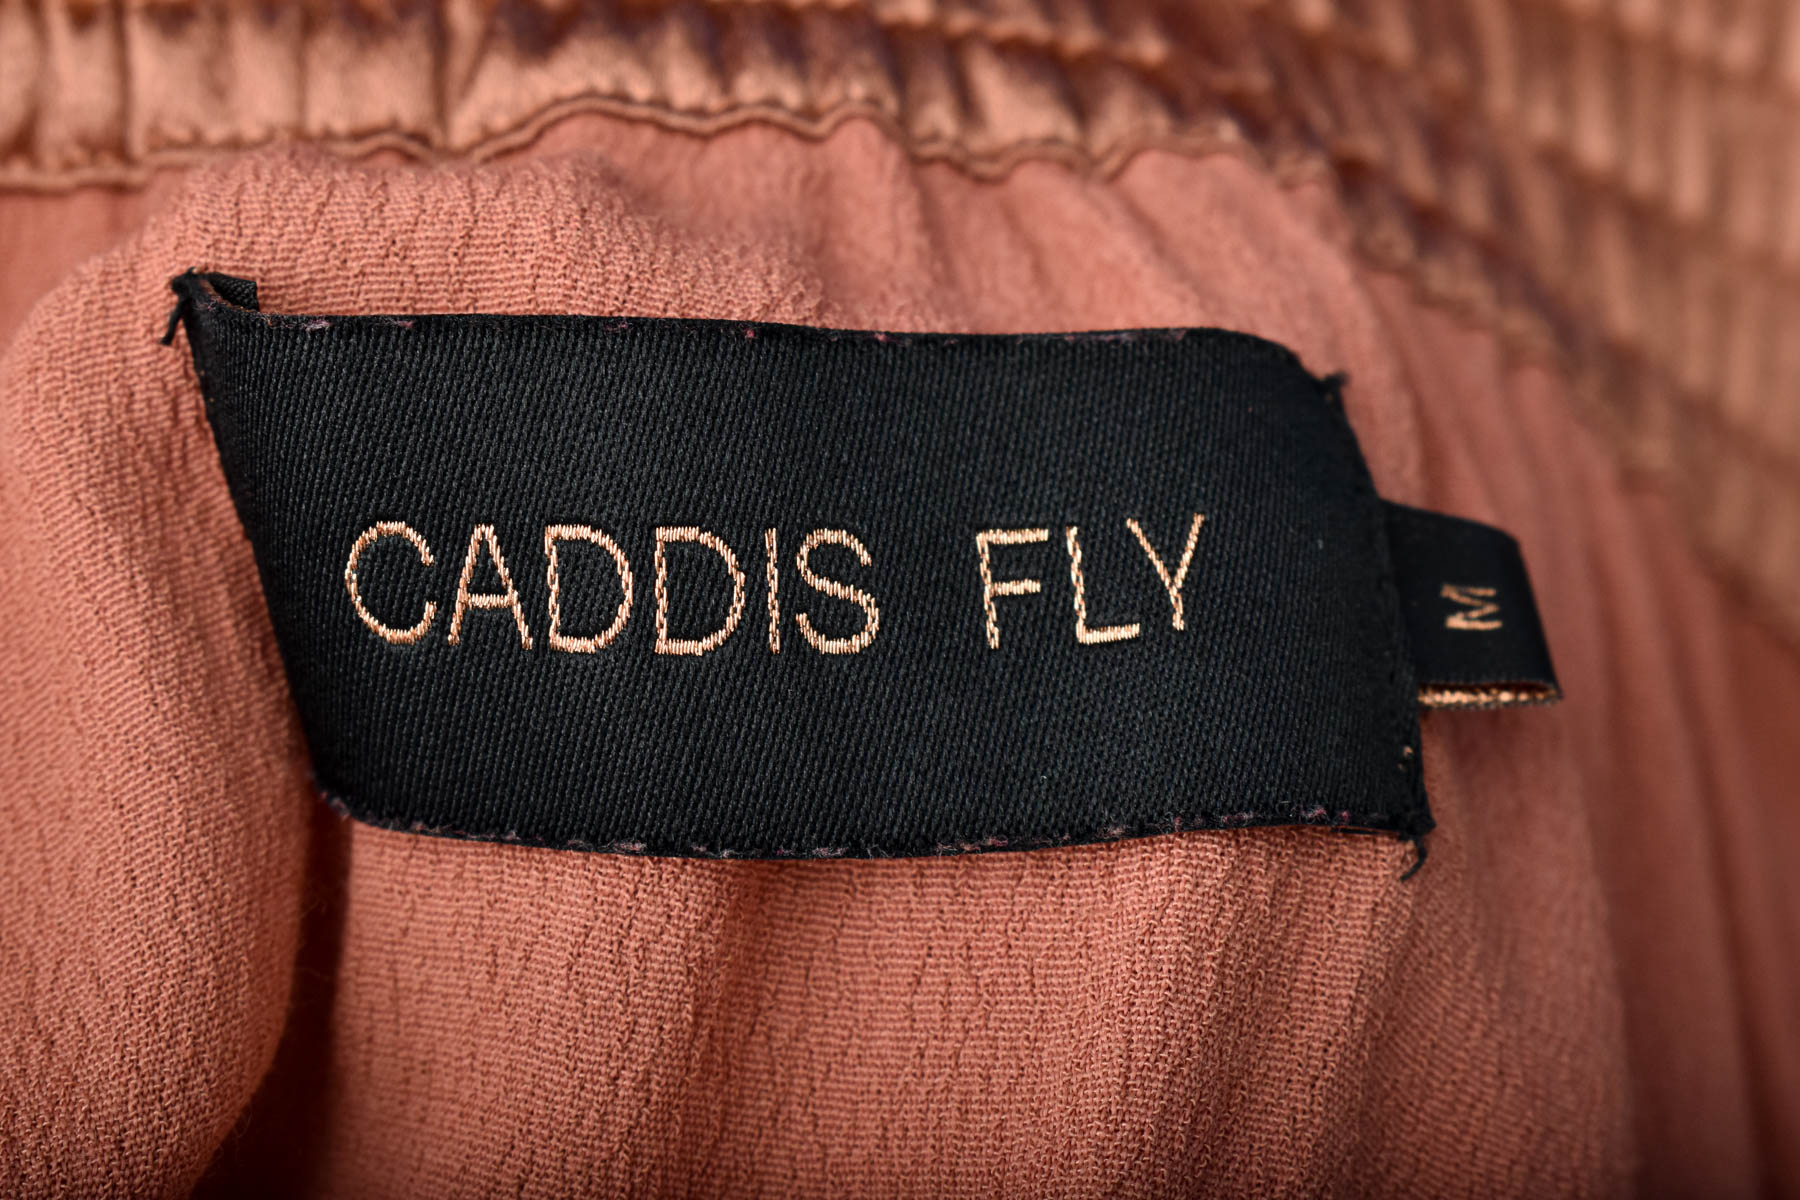 Skirt - CADDIS FLY - 2